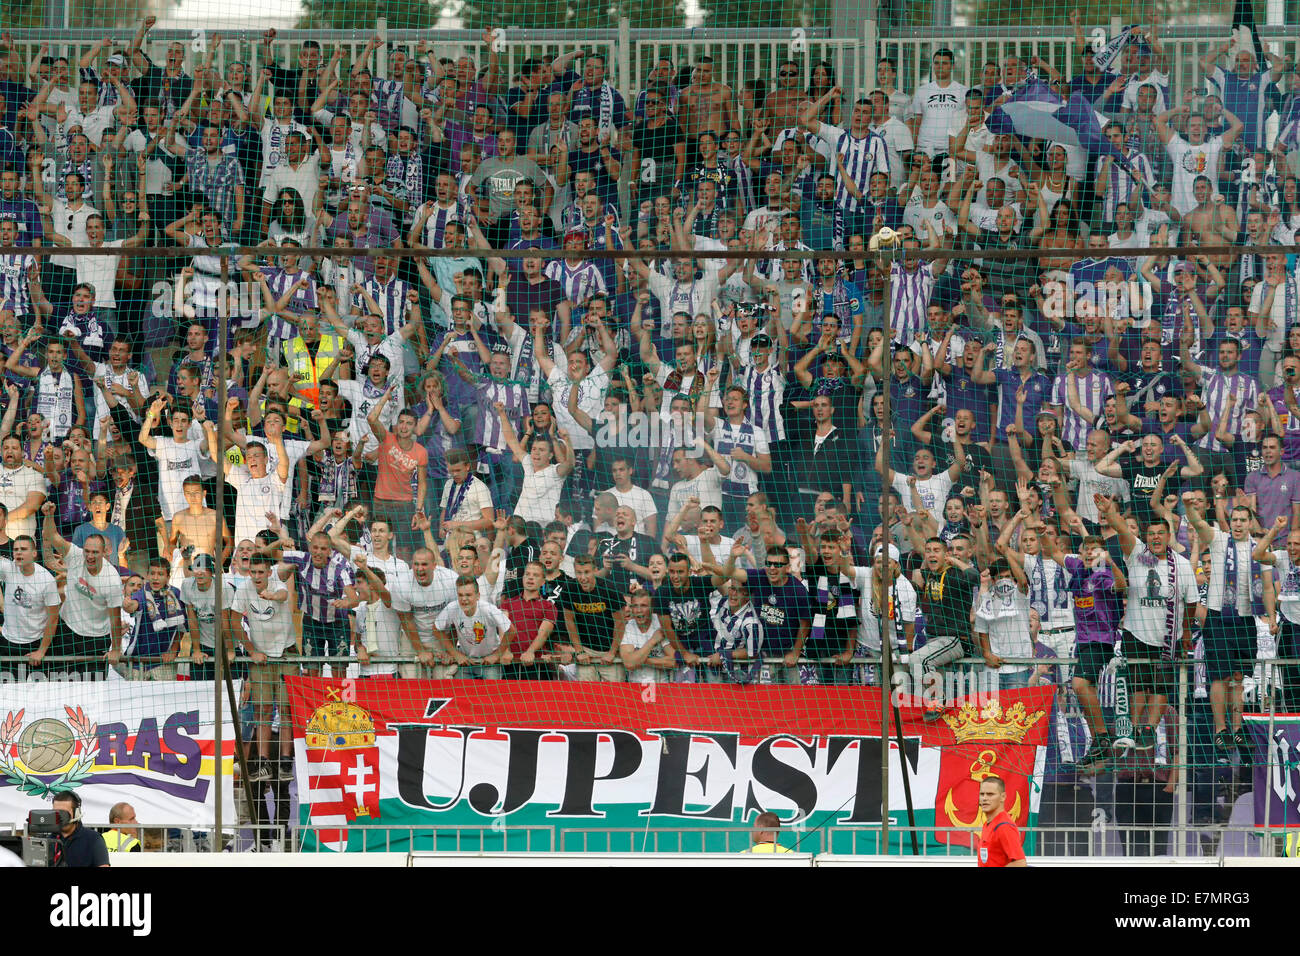 Ferencvarosi TC Vs. Sliema UEFA EL Football Match Editorial Stock Photo -  Image of field, international: 42376158